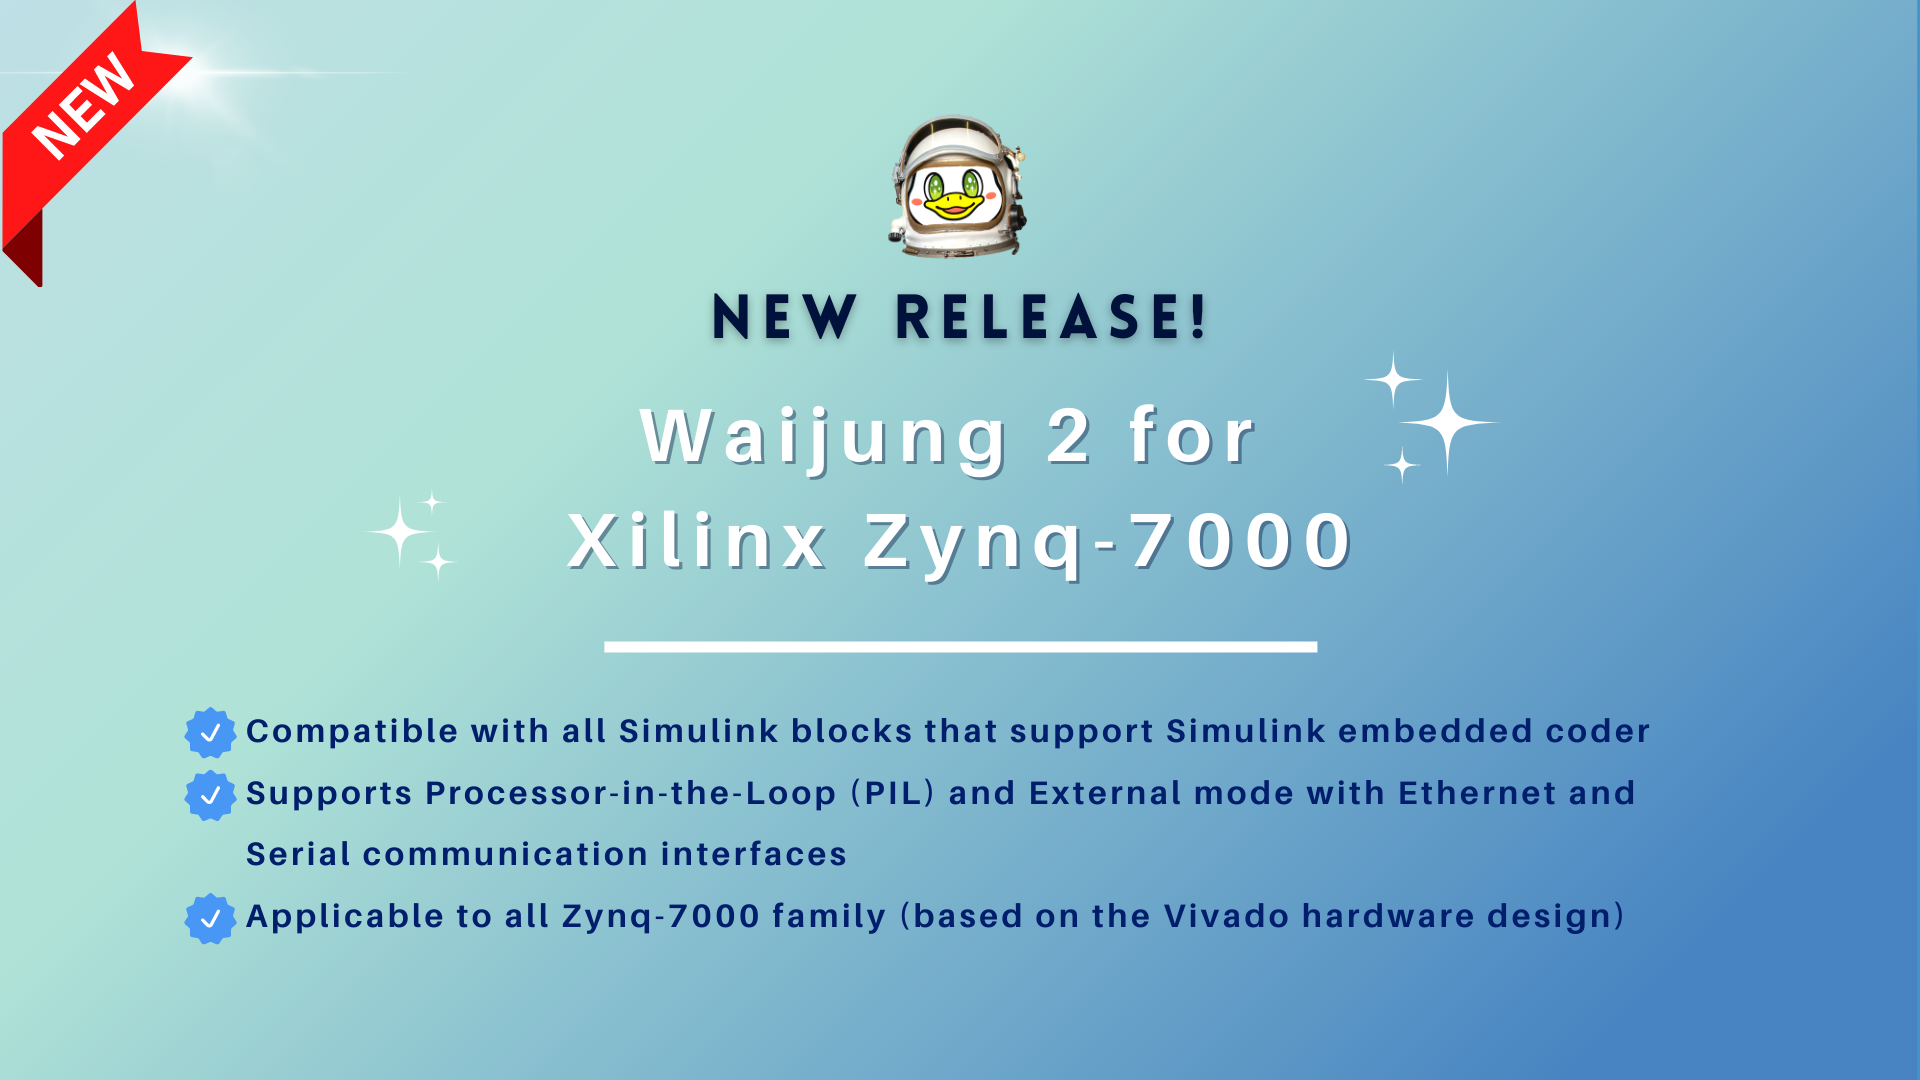 New release Waijung 2 for Xilinx Zynq-7000